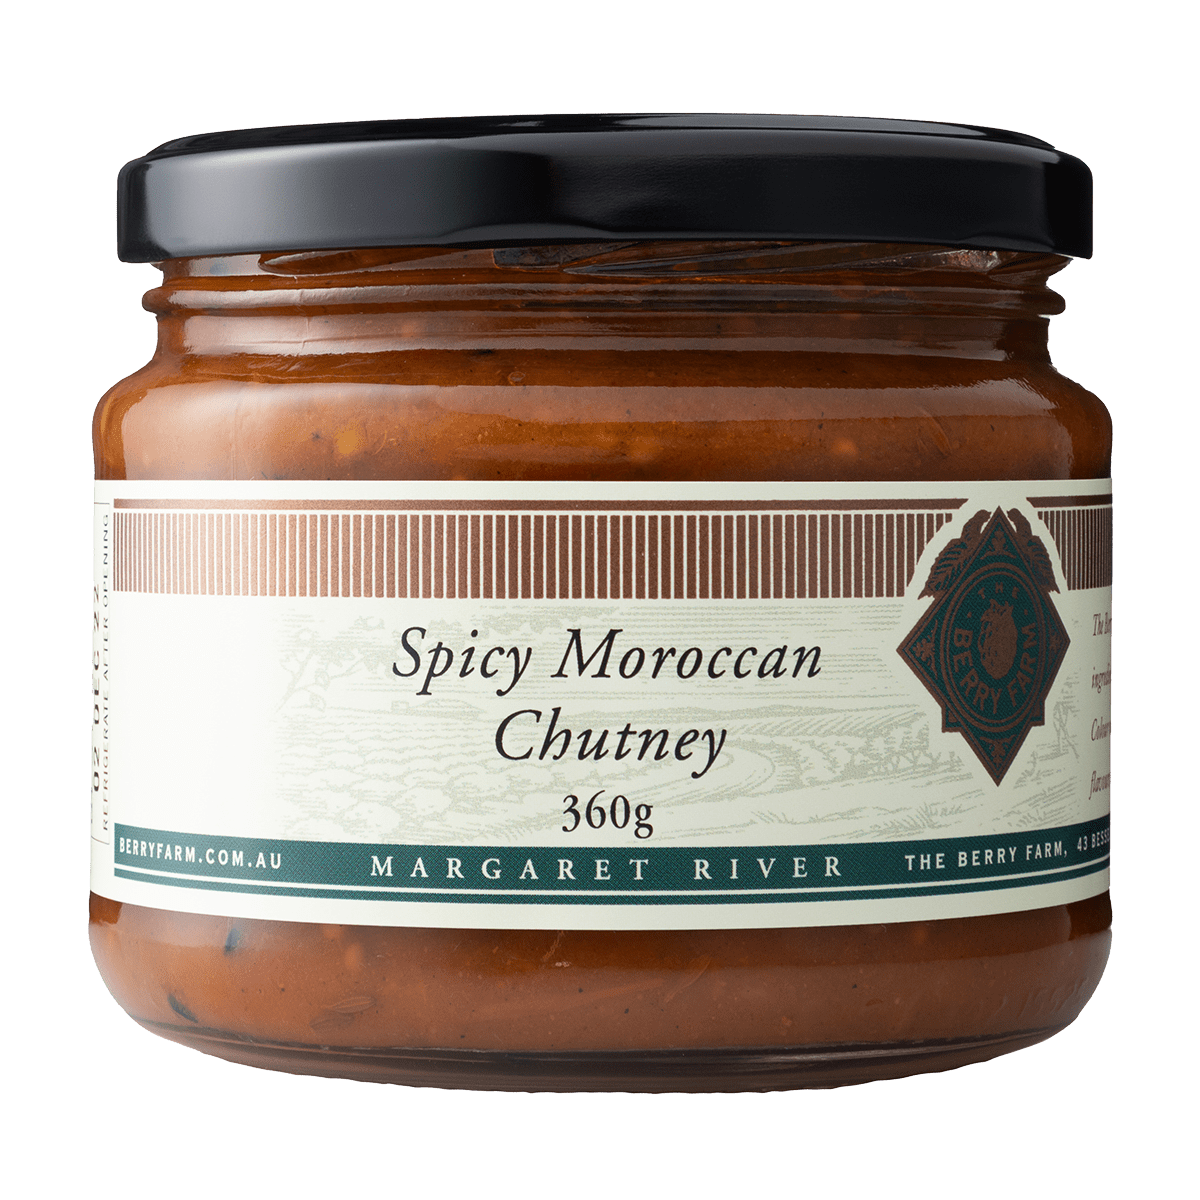 A jar of Spicy Moroccan Chutney